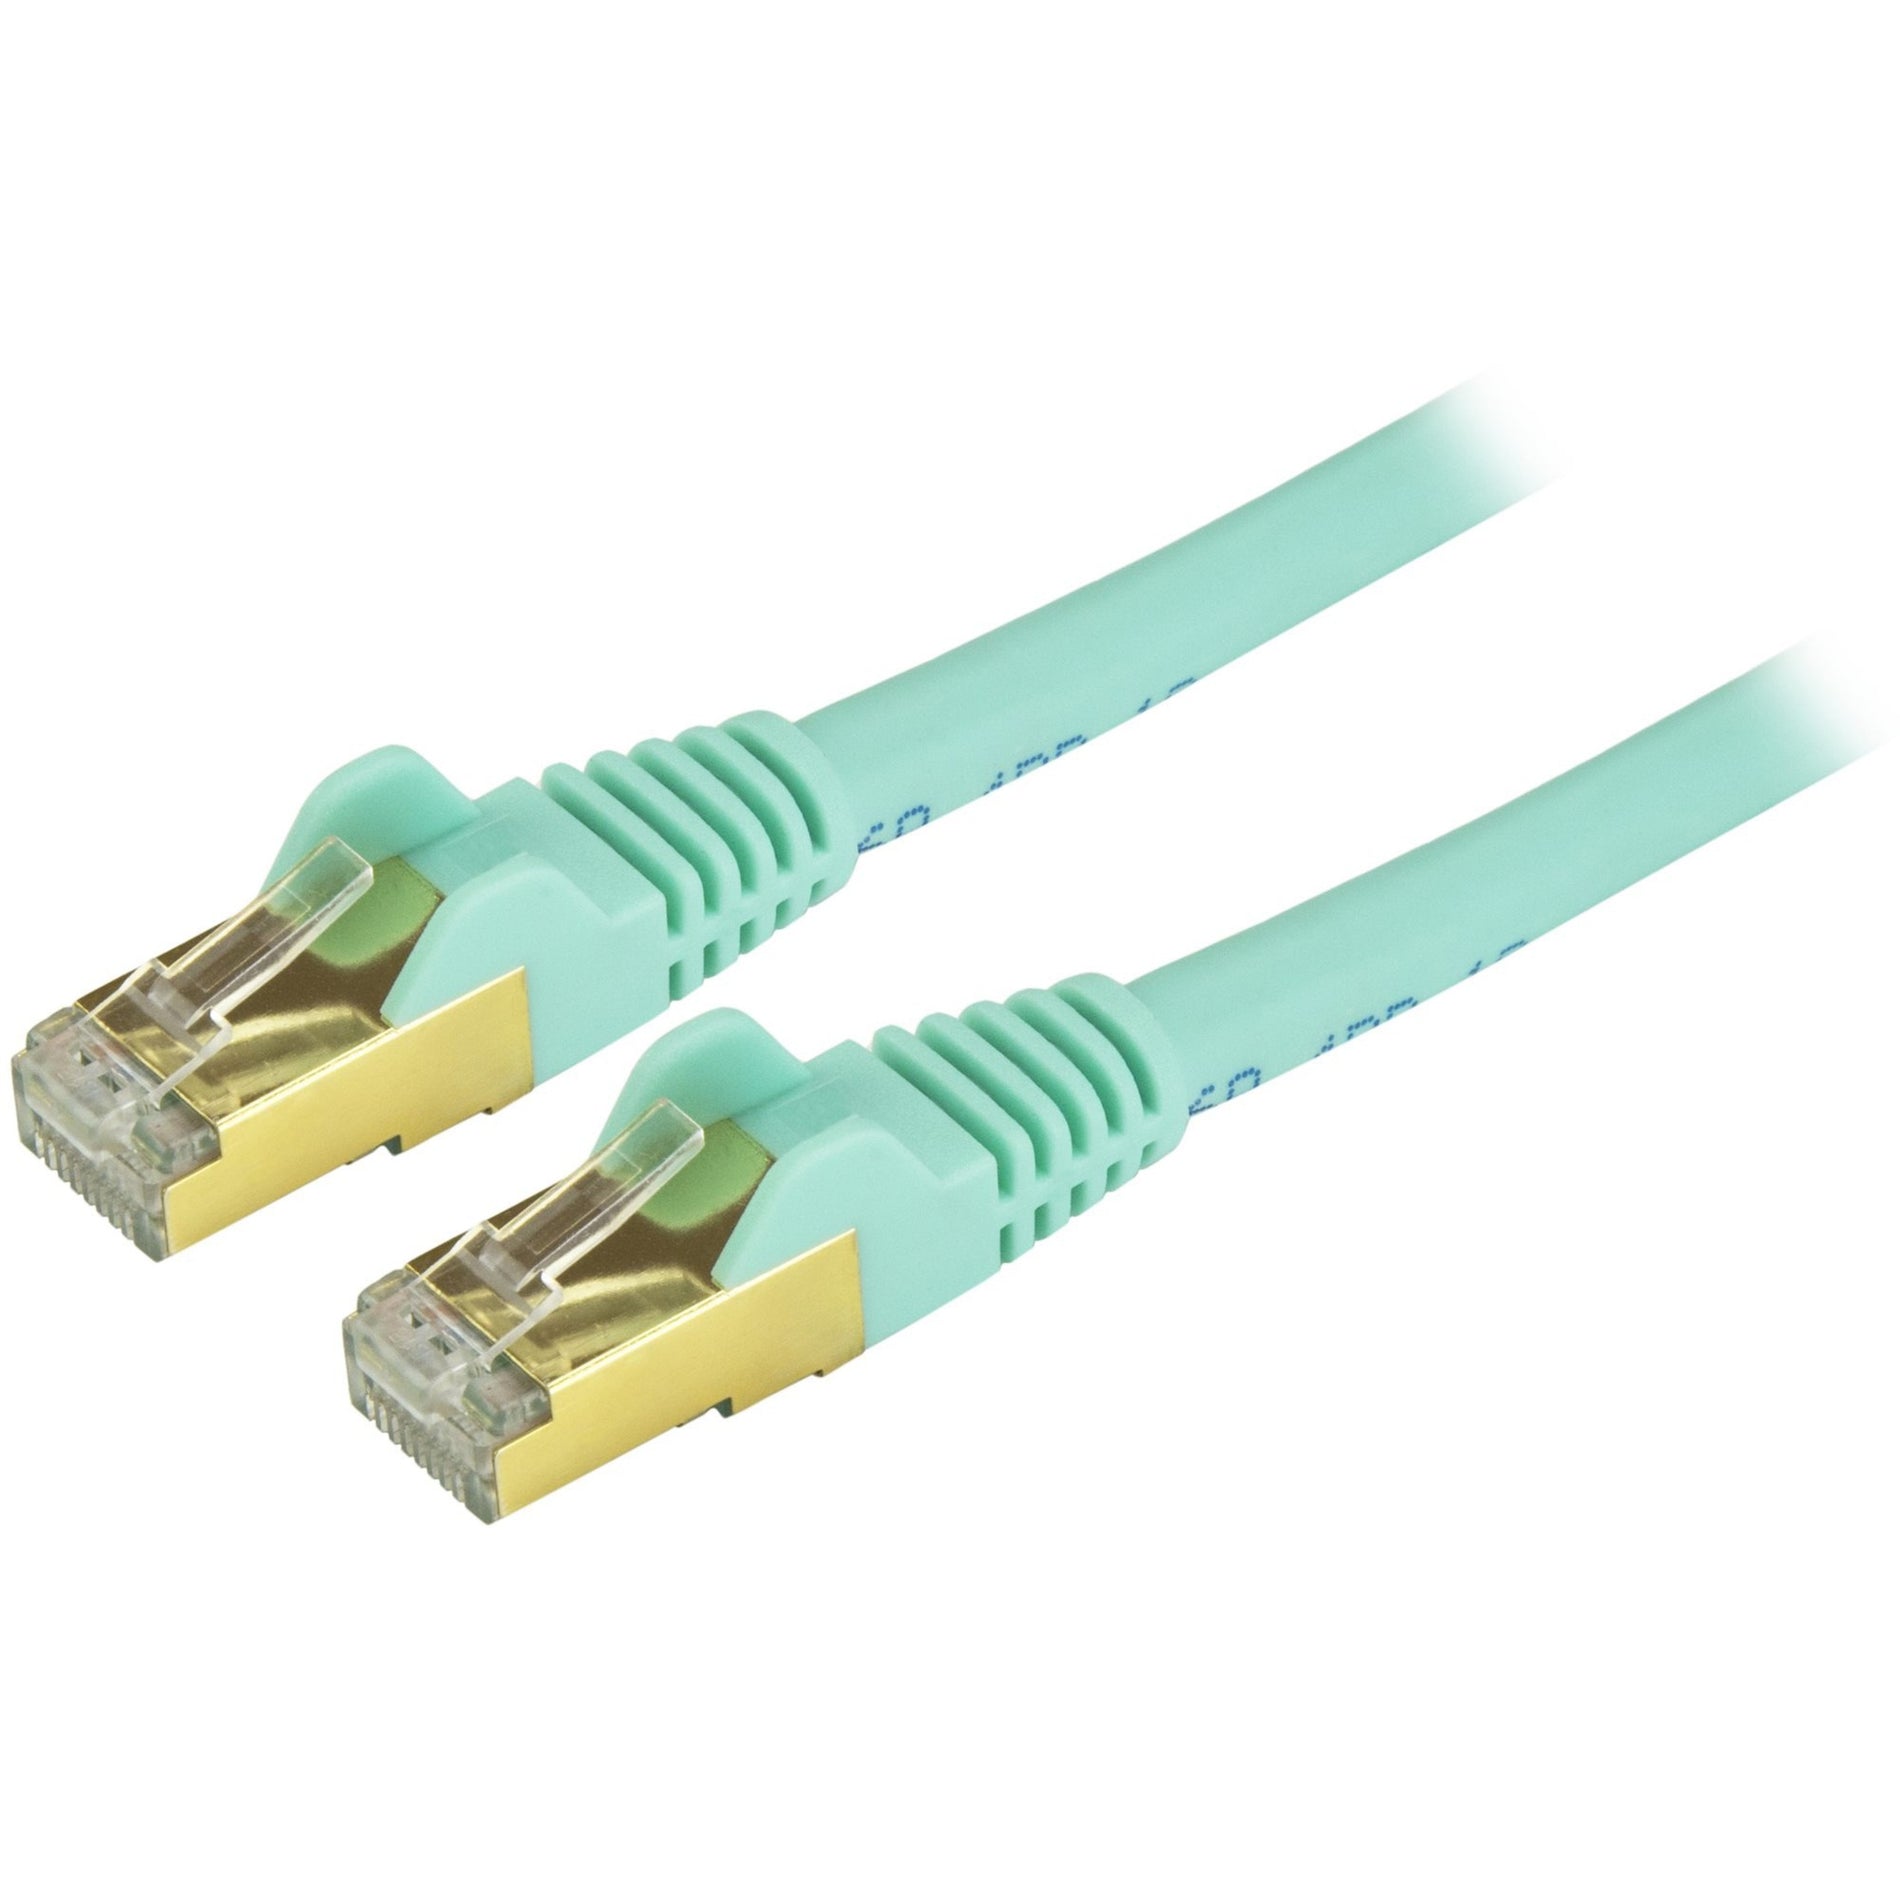 StarTech.com C6ASPAT14AQ Cat6a Ethernet Patch Cable - Shielded (STP) - 14 ft., Aqua, Snagless RJ45 Ethernet Cord